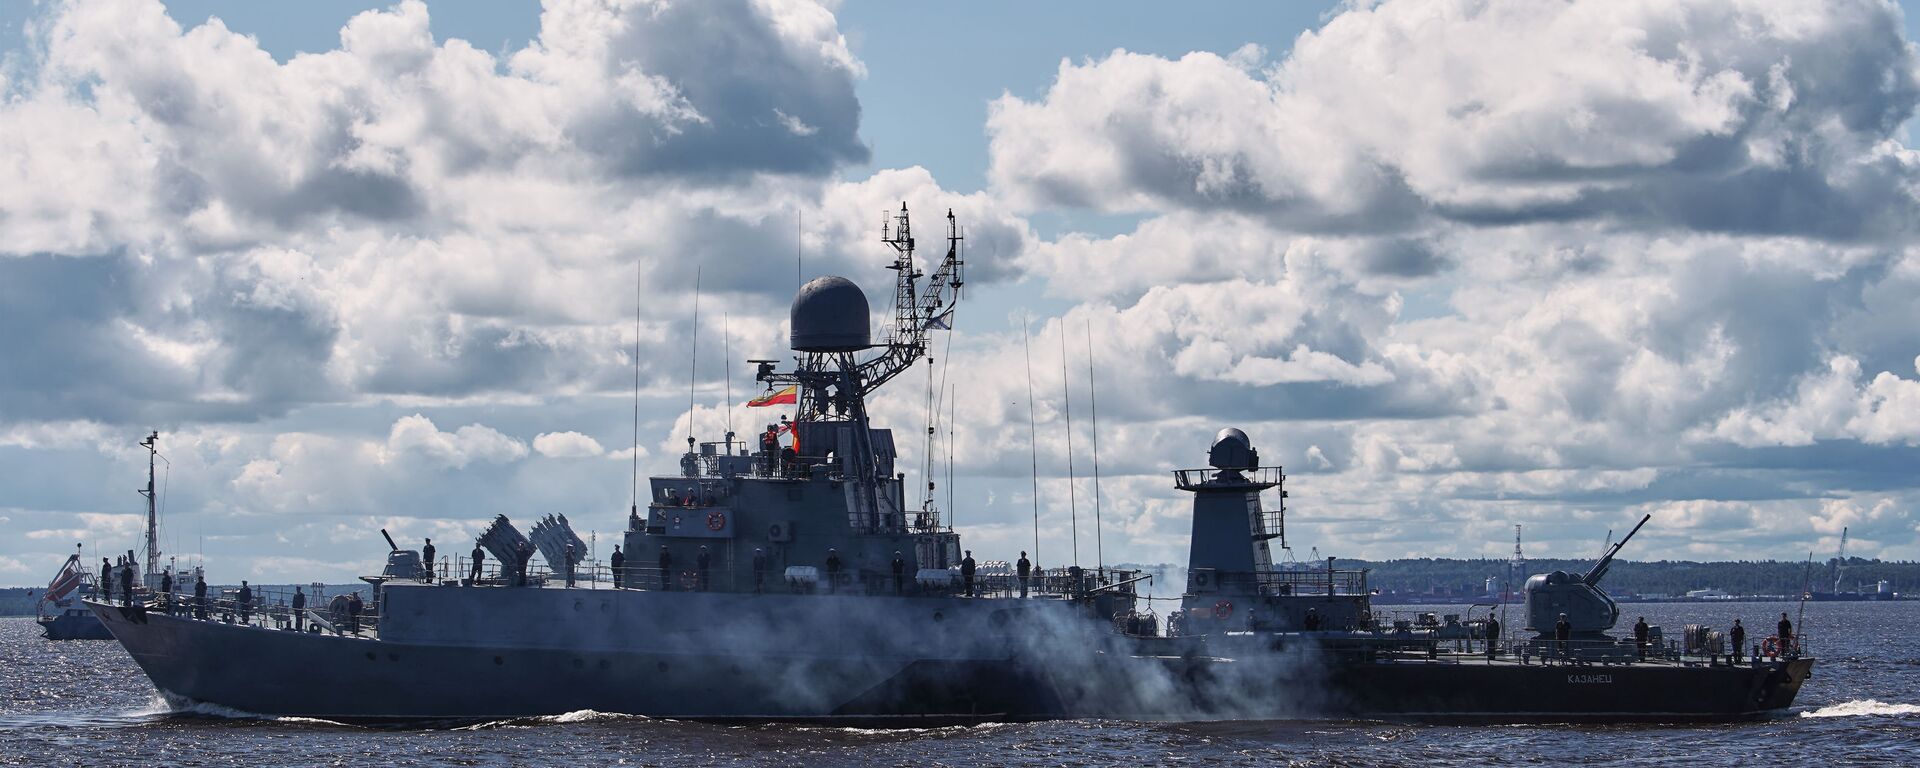 Репетиция парада в честь Дня Военно-морского флота - Sputnik Latvija, 1920, 21.05.2021